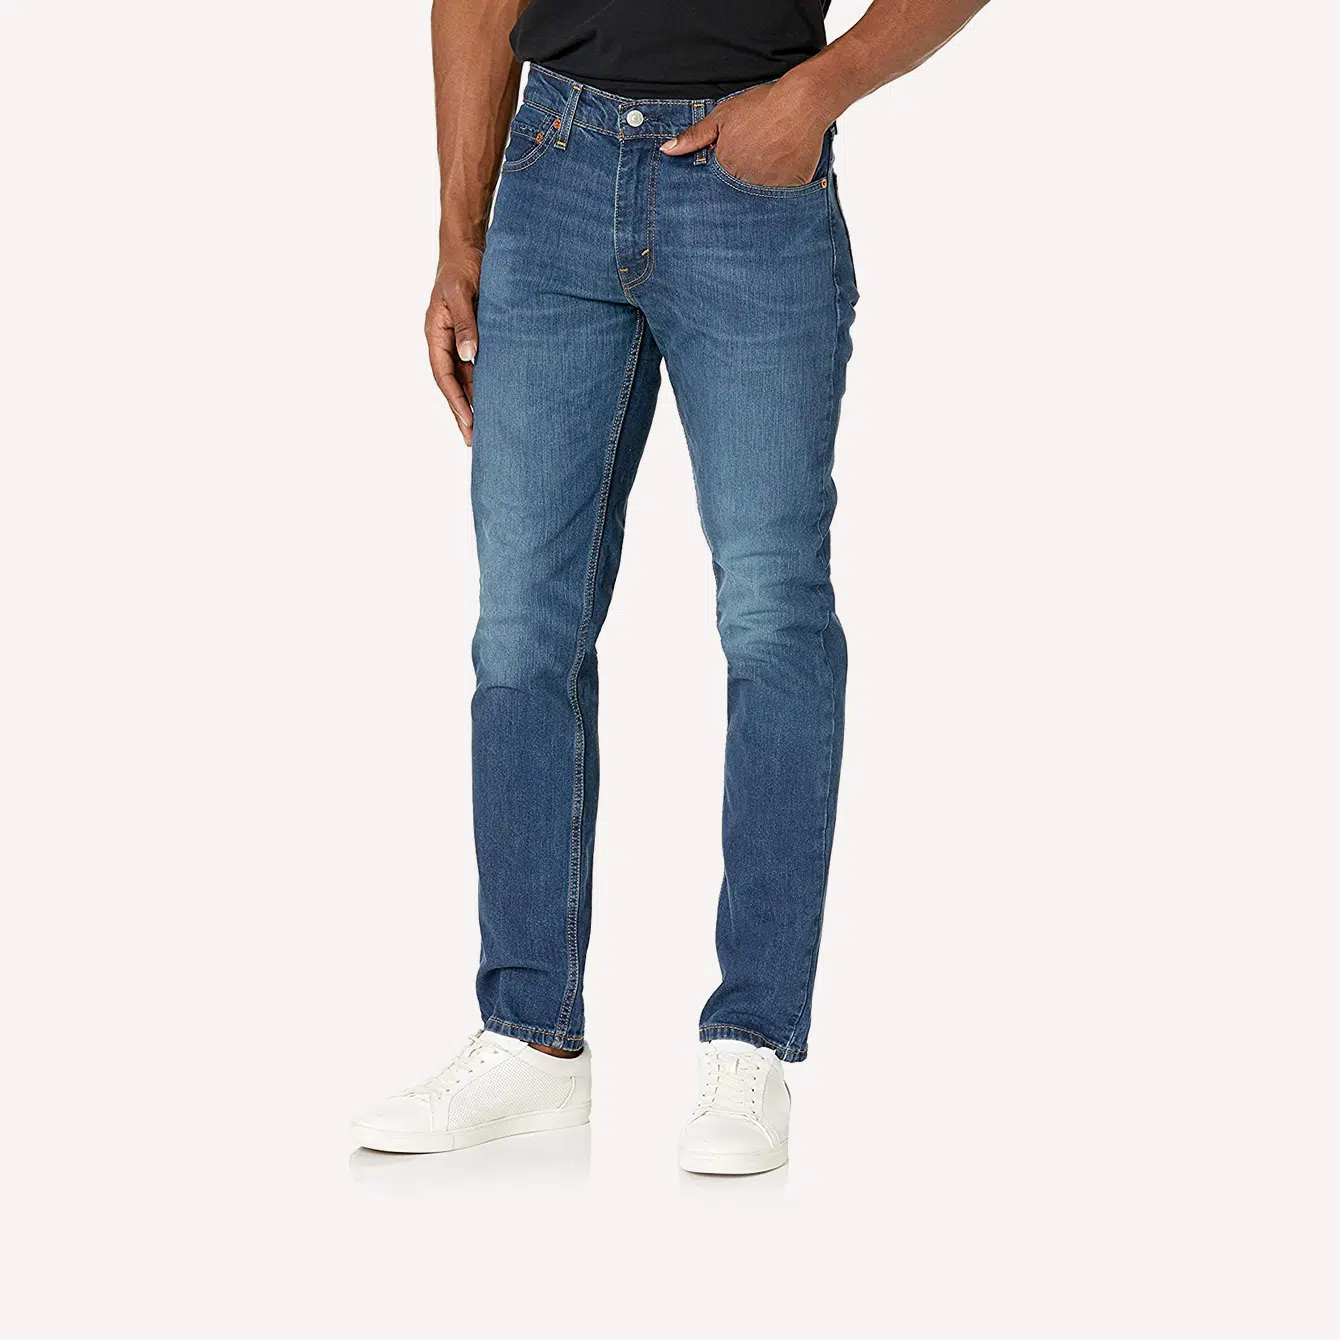 MEN FASHION Jeans Basic discount 68% NoName shorts jeans White 40                  EU 